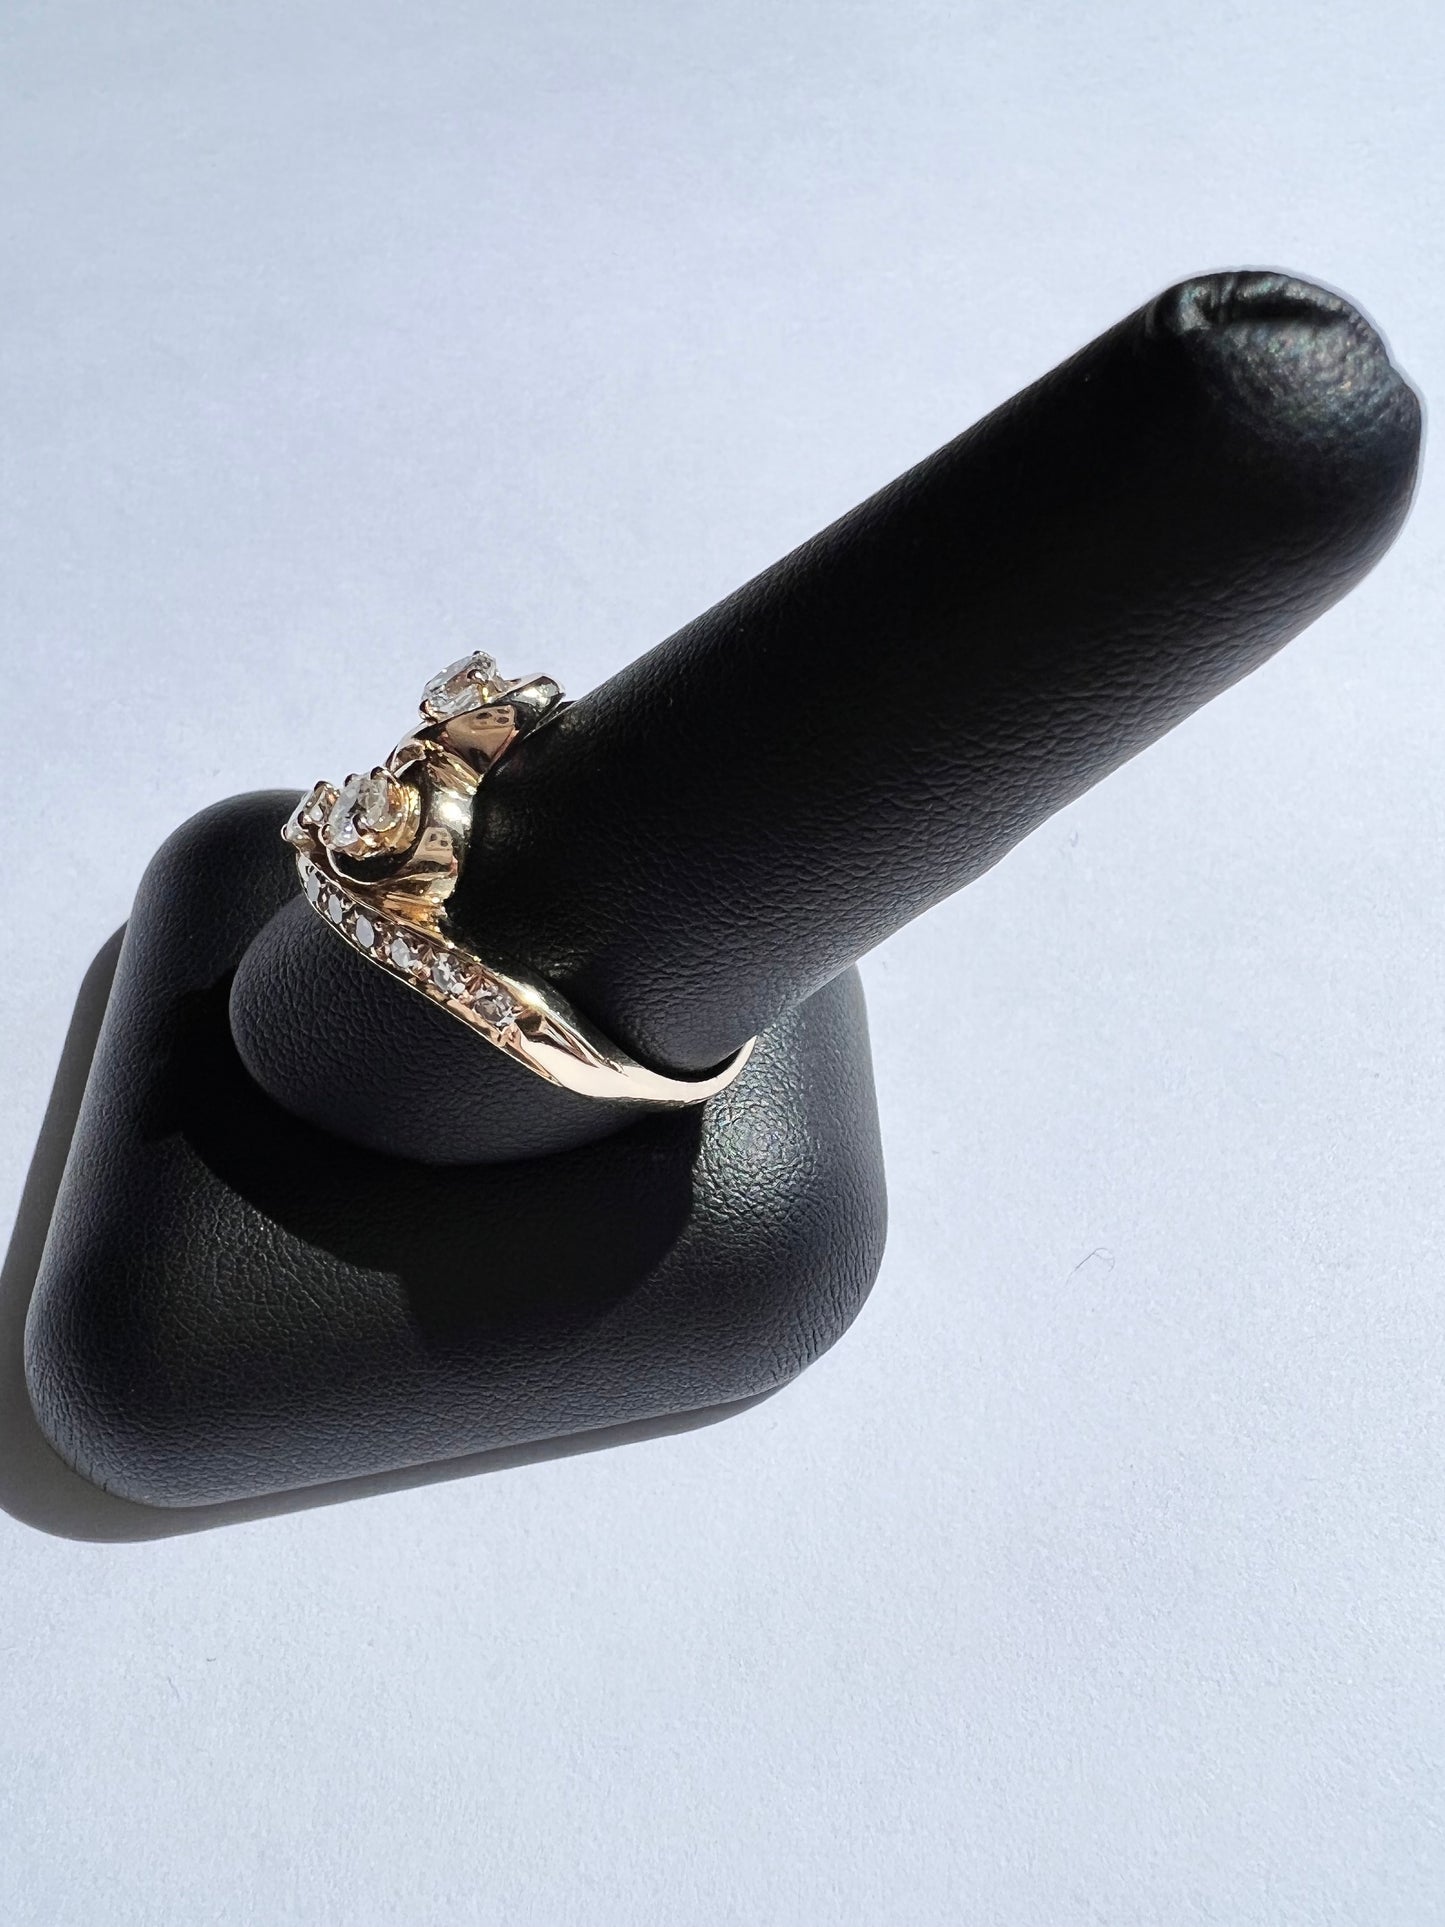 14K Yellow 3 Stone Diamond Ring- Unique Design!